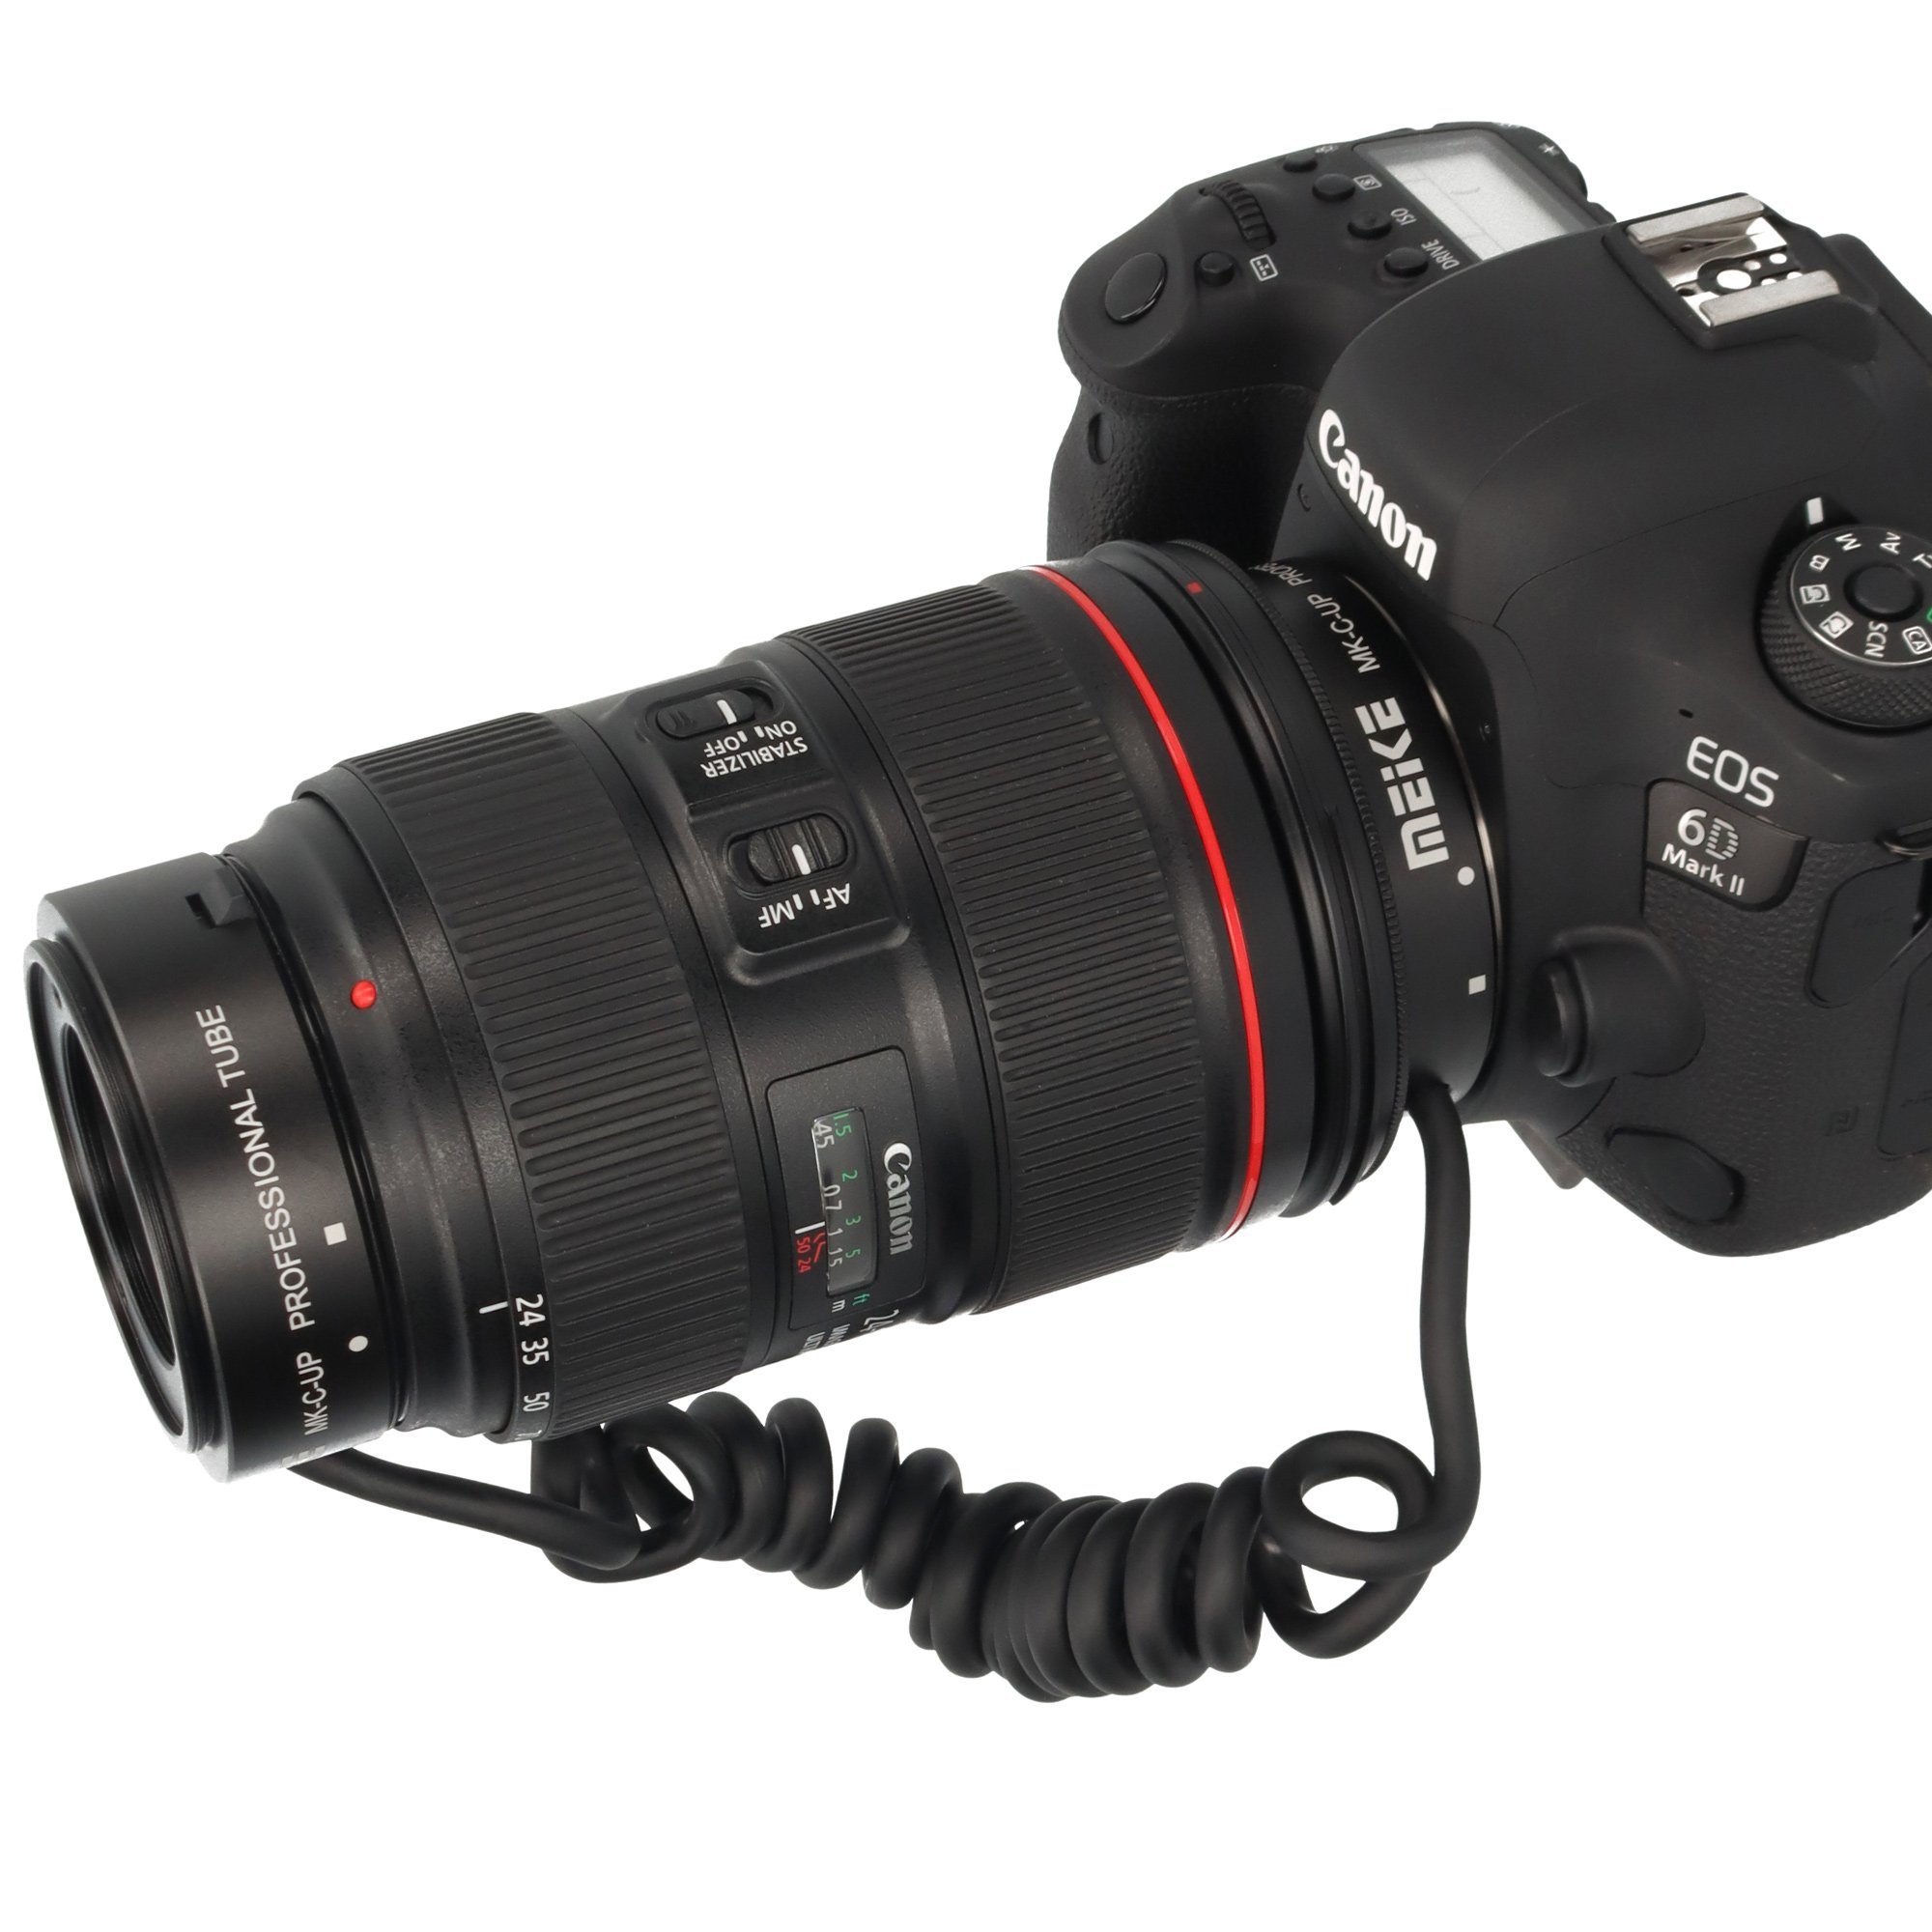 Meike Multifunktionale elektronische Makro-Zwischenringe Canon EOS MK-C-UP Makroobjektiv